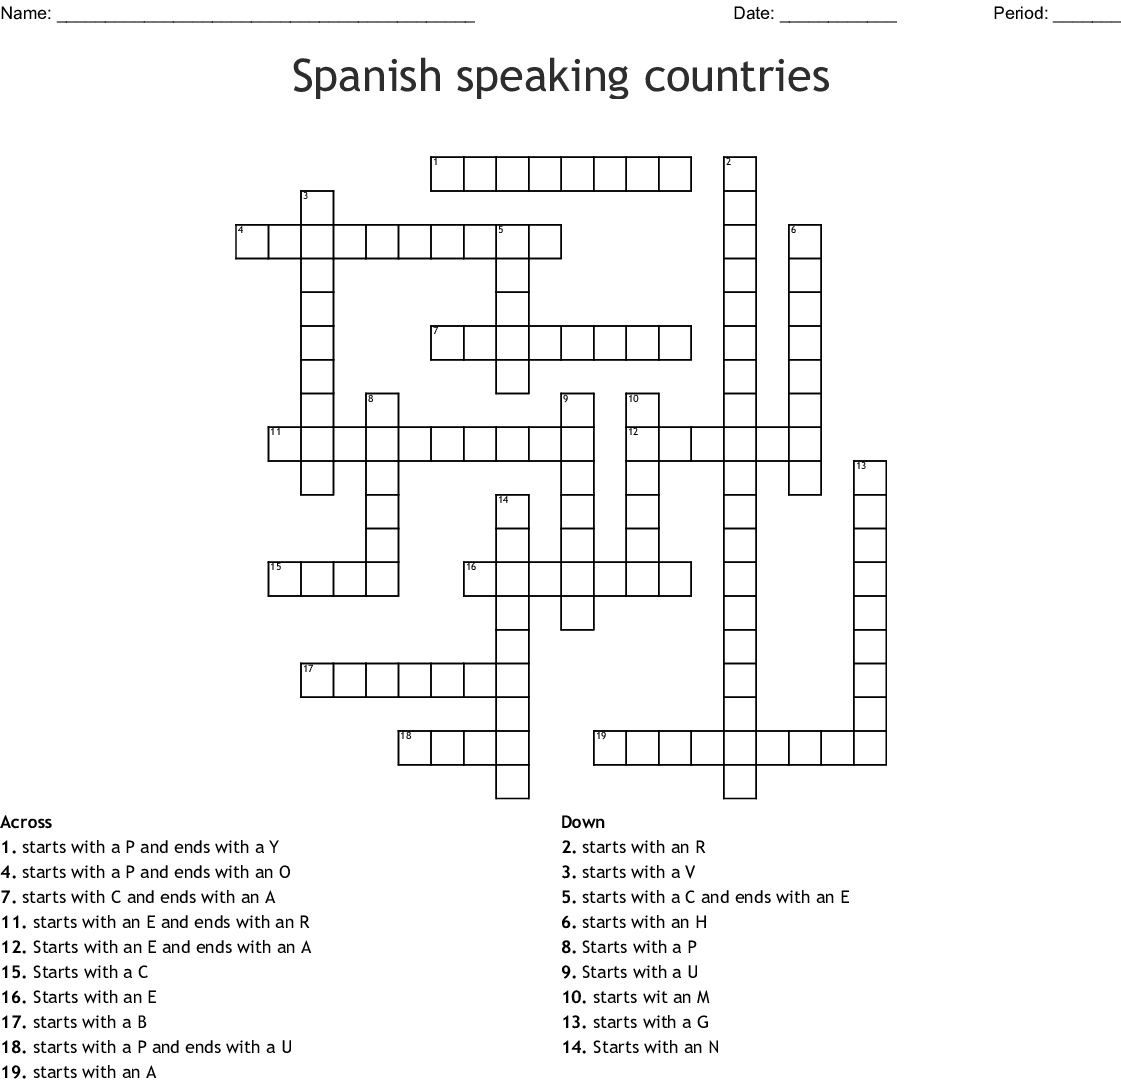 Spanish Speaking Countries Crossword - Wordmint - Printable Spanish Crossword Puzzle Answers